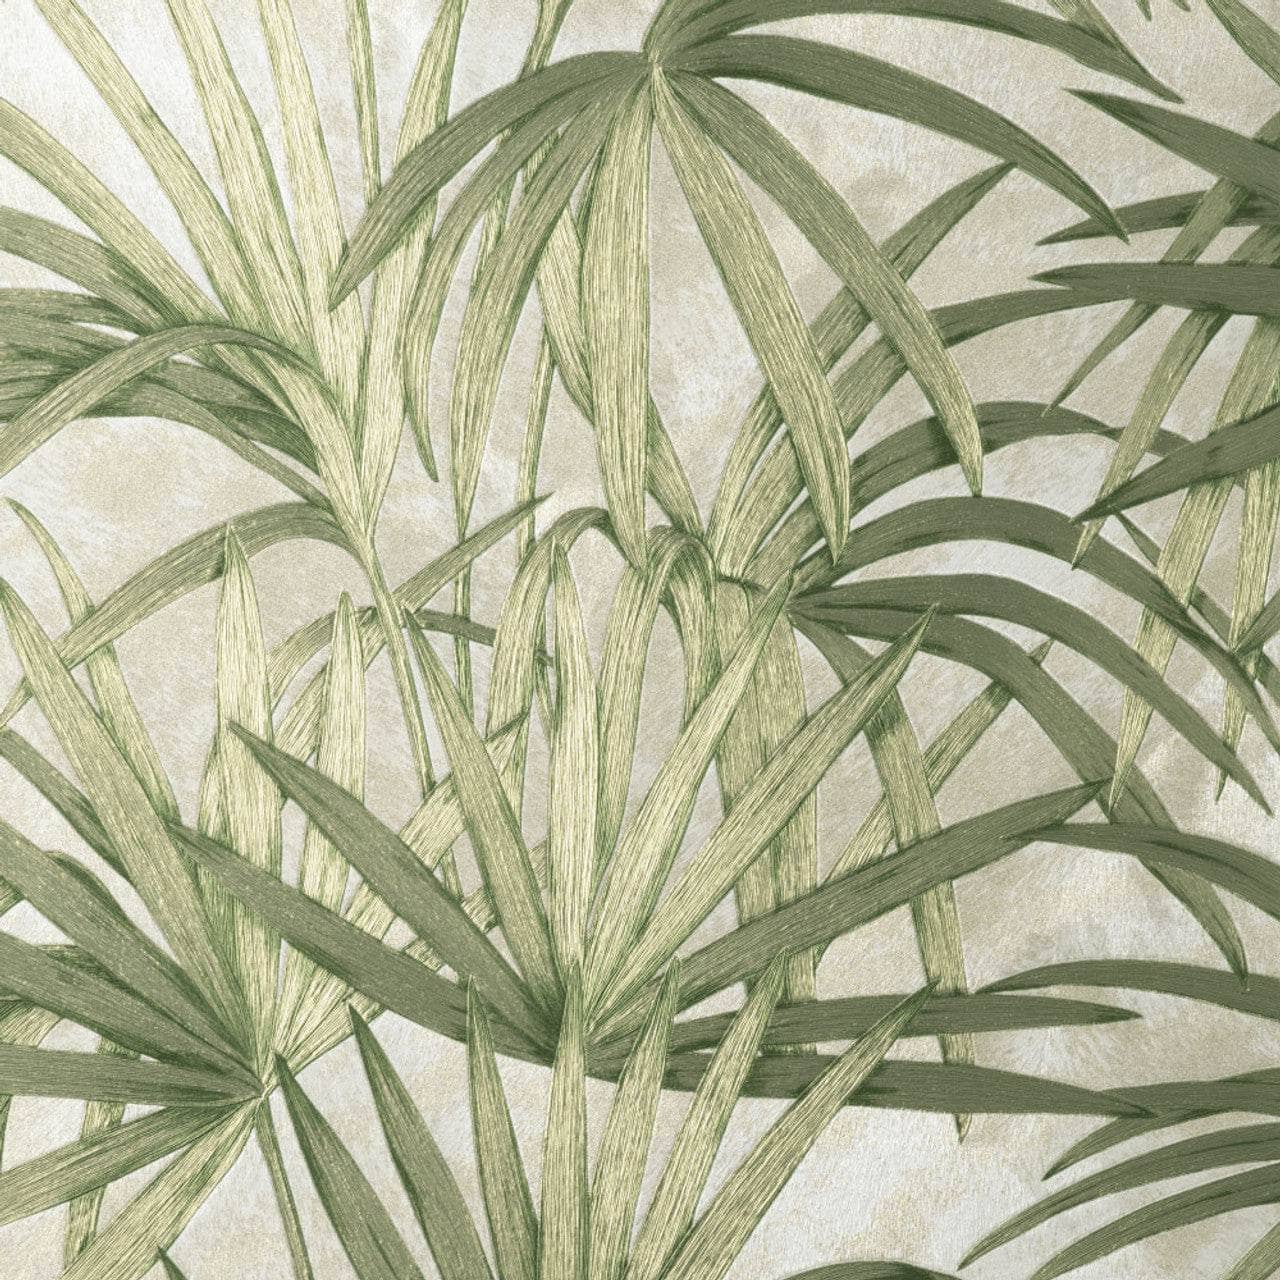 Wallpaper  - Fine Décor Milano Palm Leaf Green Wallpaper - M95626  -  60001352